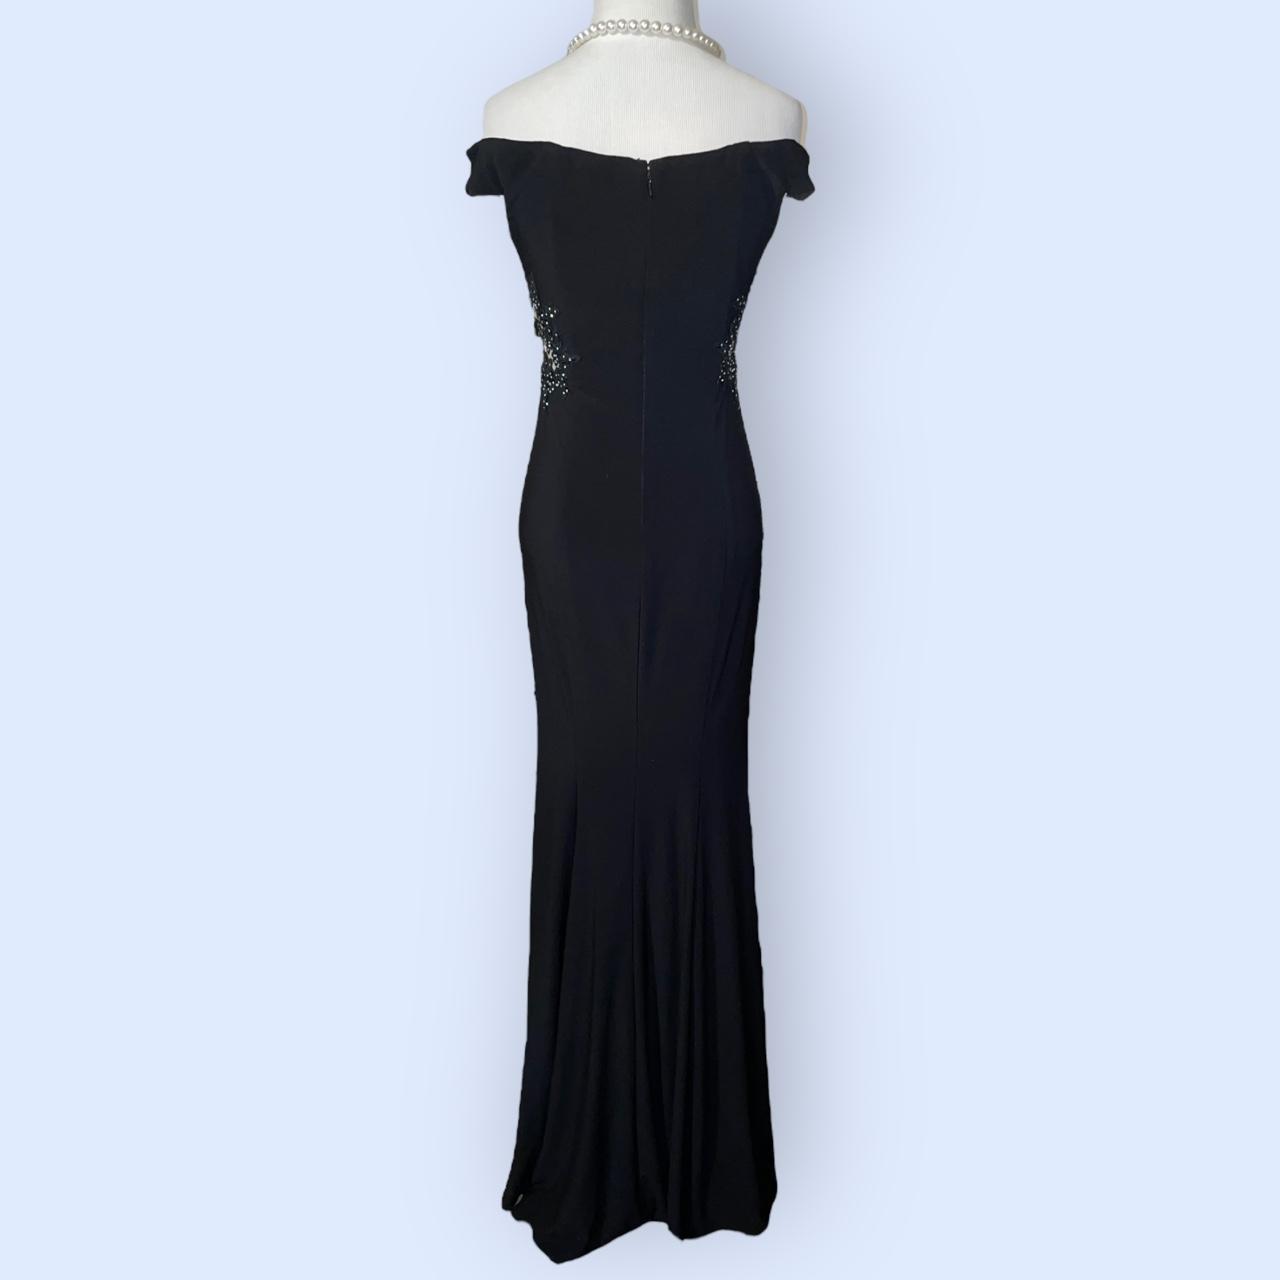 Product Image 2 - Blondie Nites Elegant Prom Dress

Description: